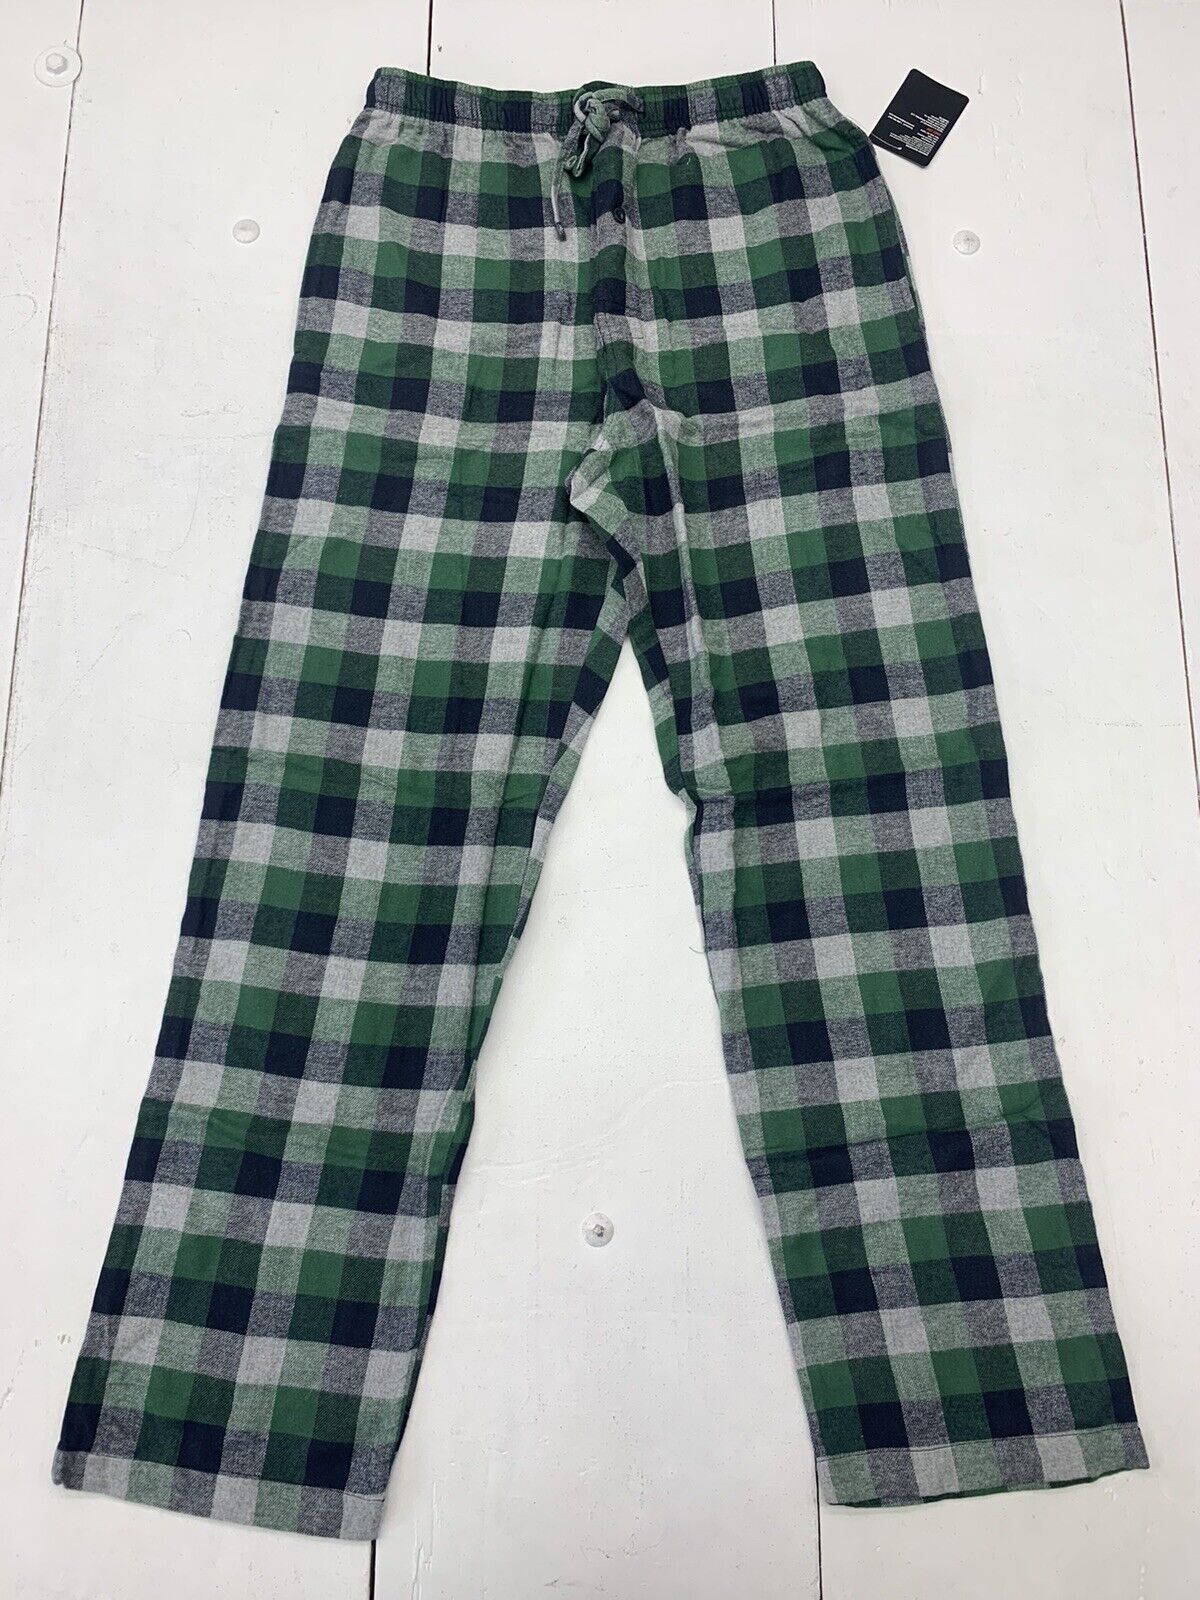 Hanes Mens Green Plaid Pajama Pants Size Medium - beyond exchange